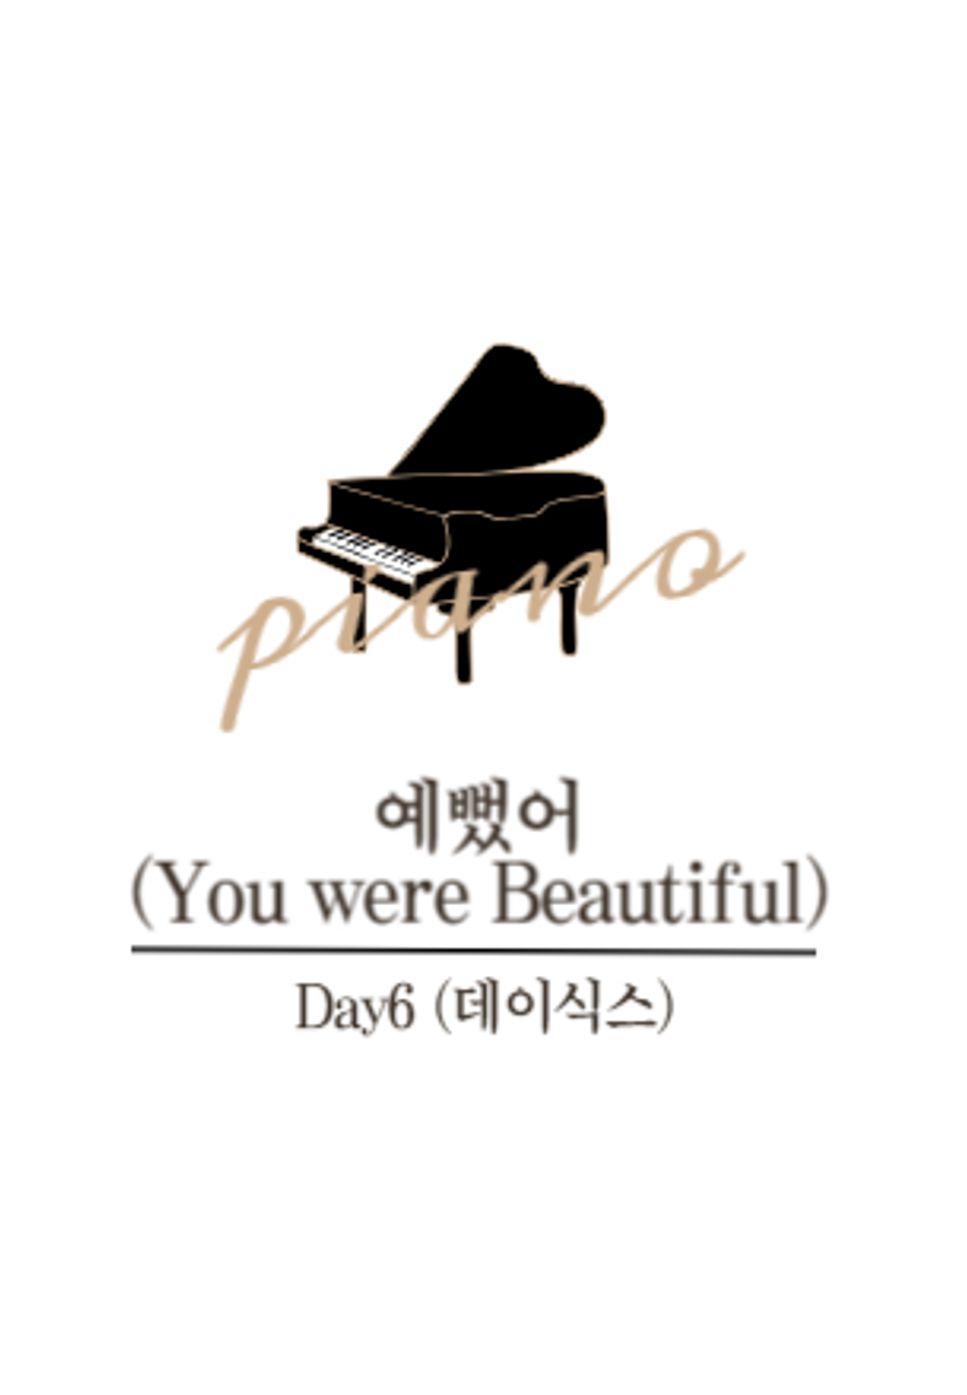 Day6 - You were beautiful by 피아노자리